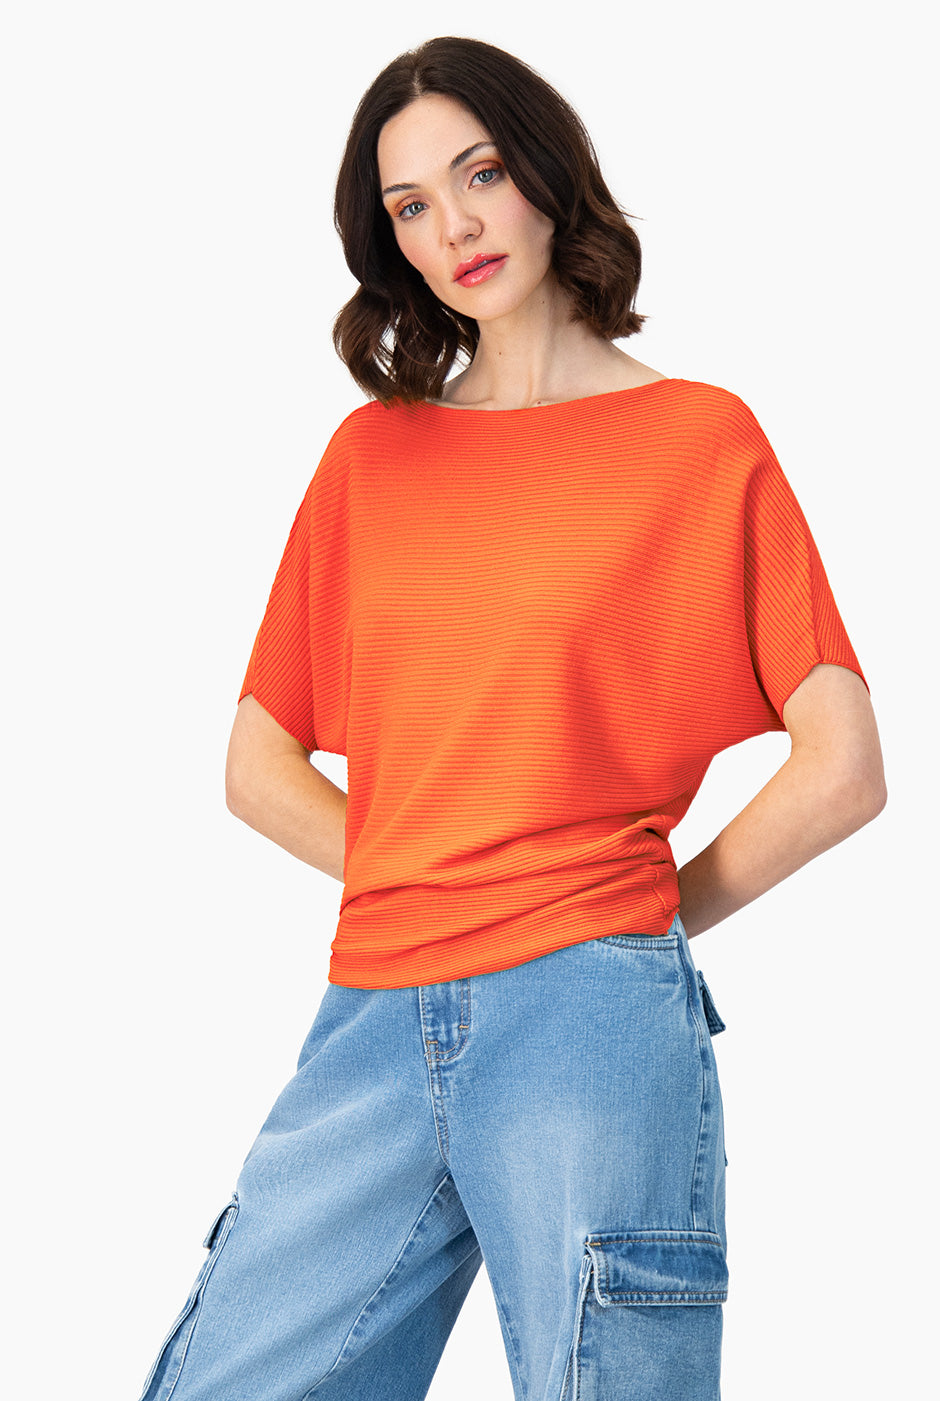 Blusa manga corta color naranja